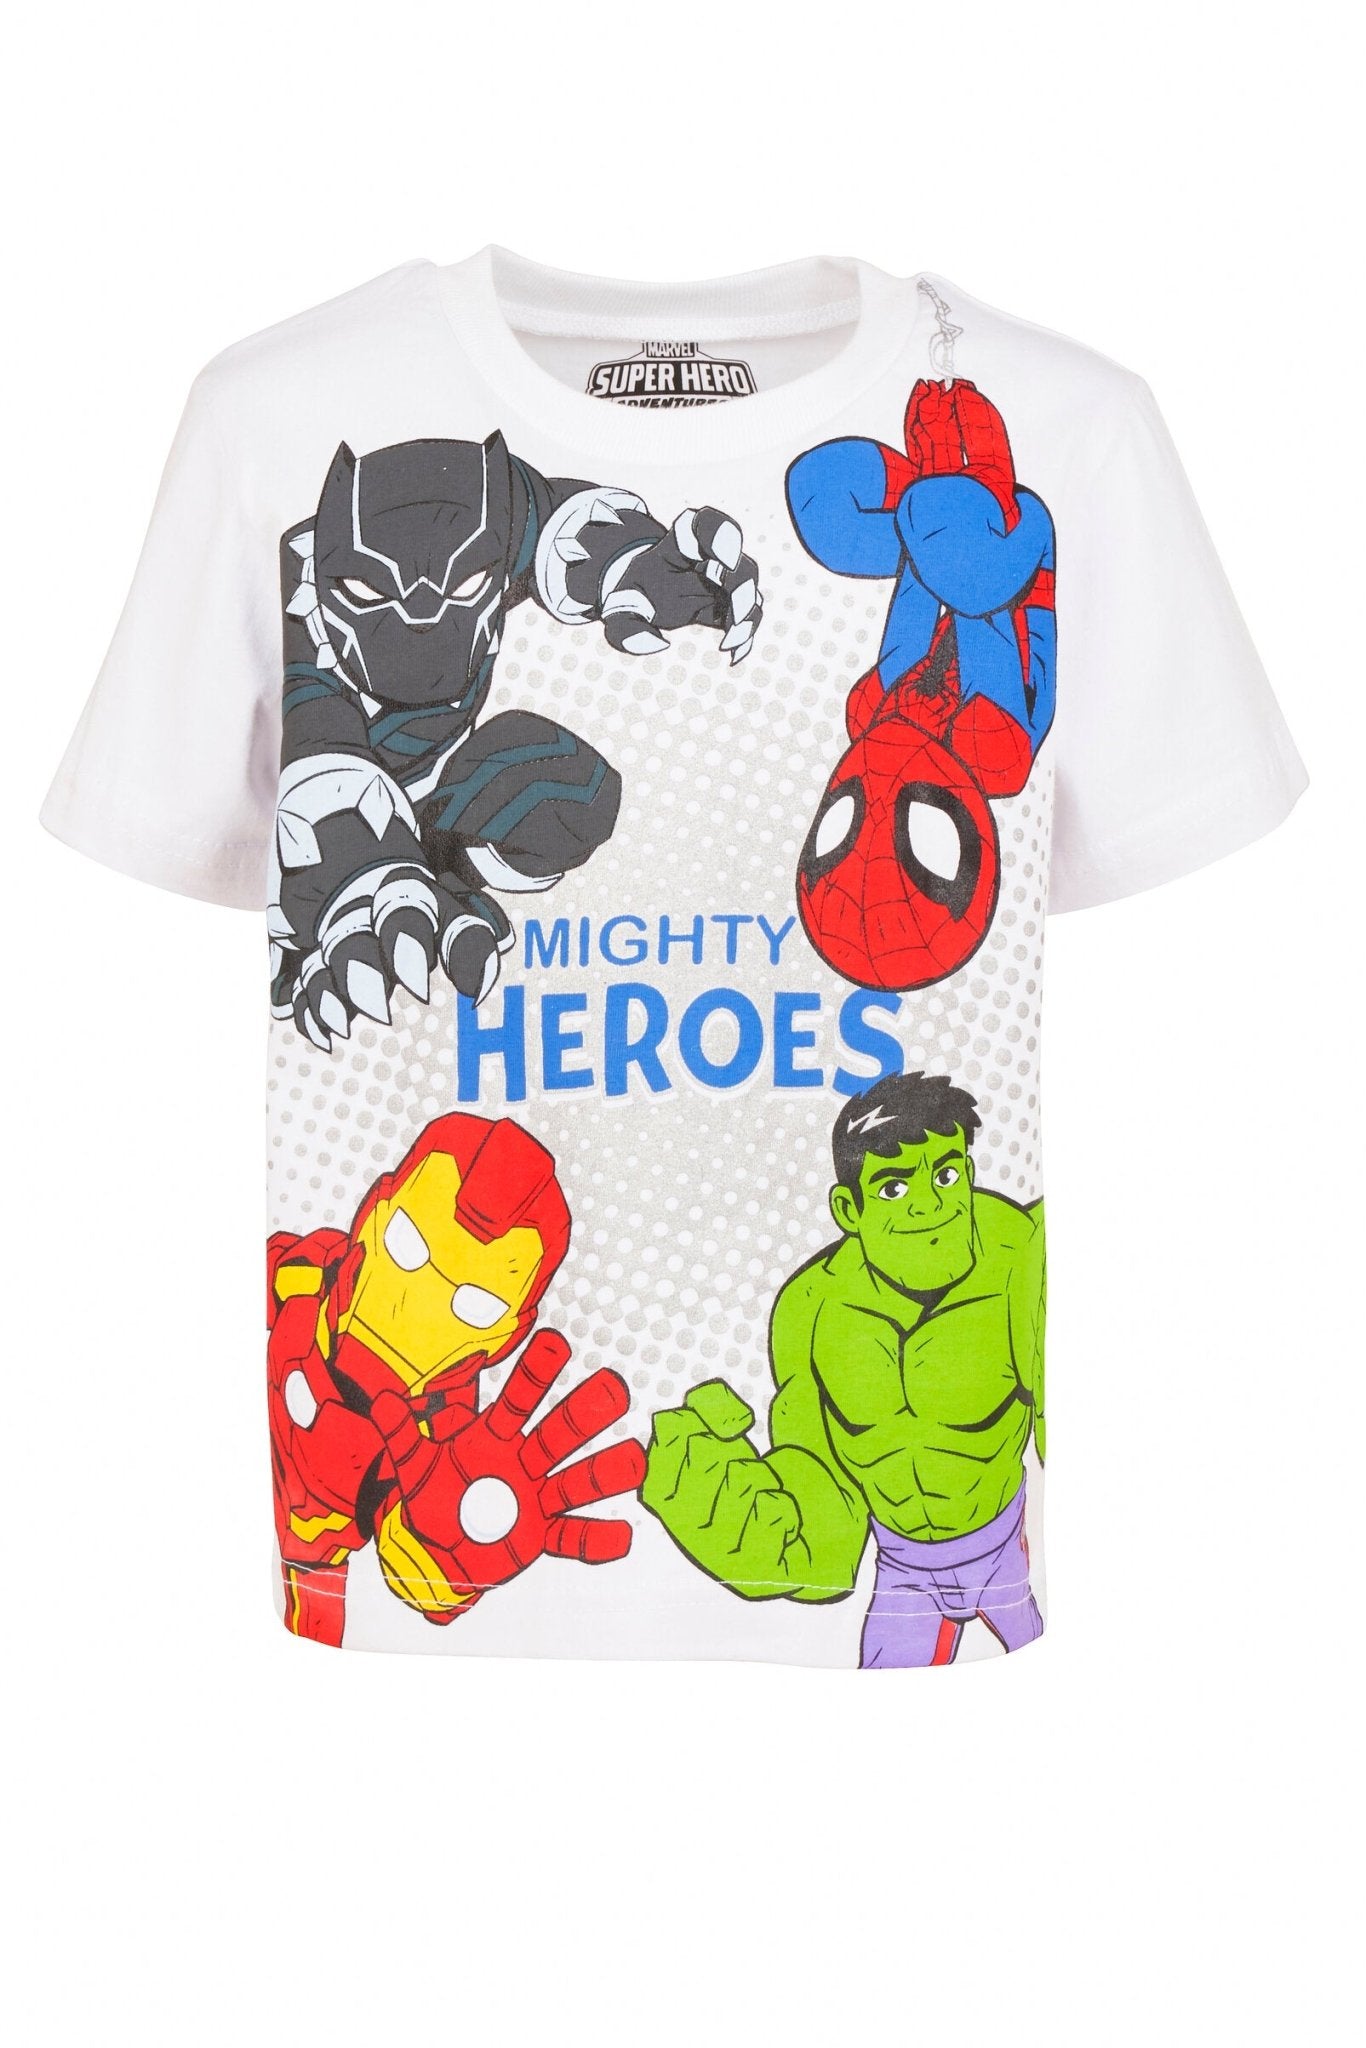 Avengers Graphic T-Shirt & Shorts Set - imagikids